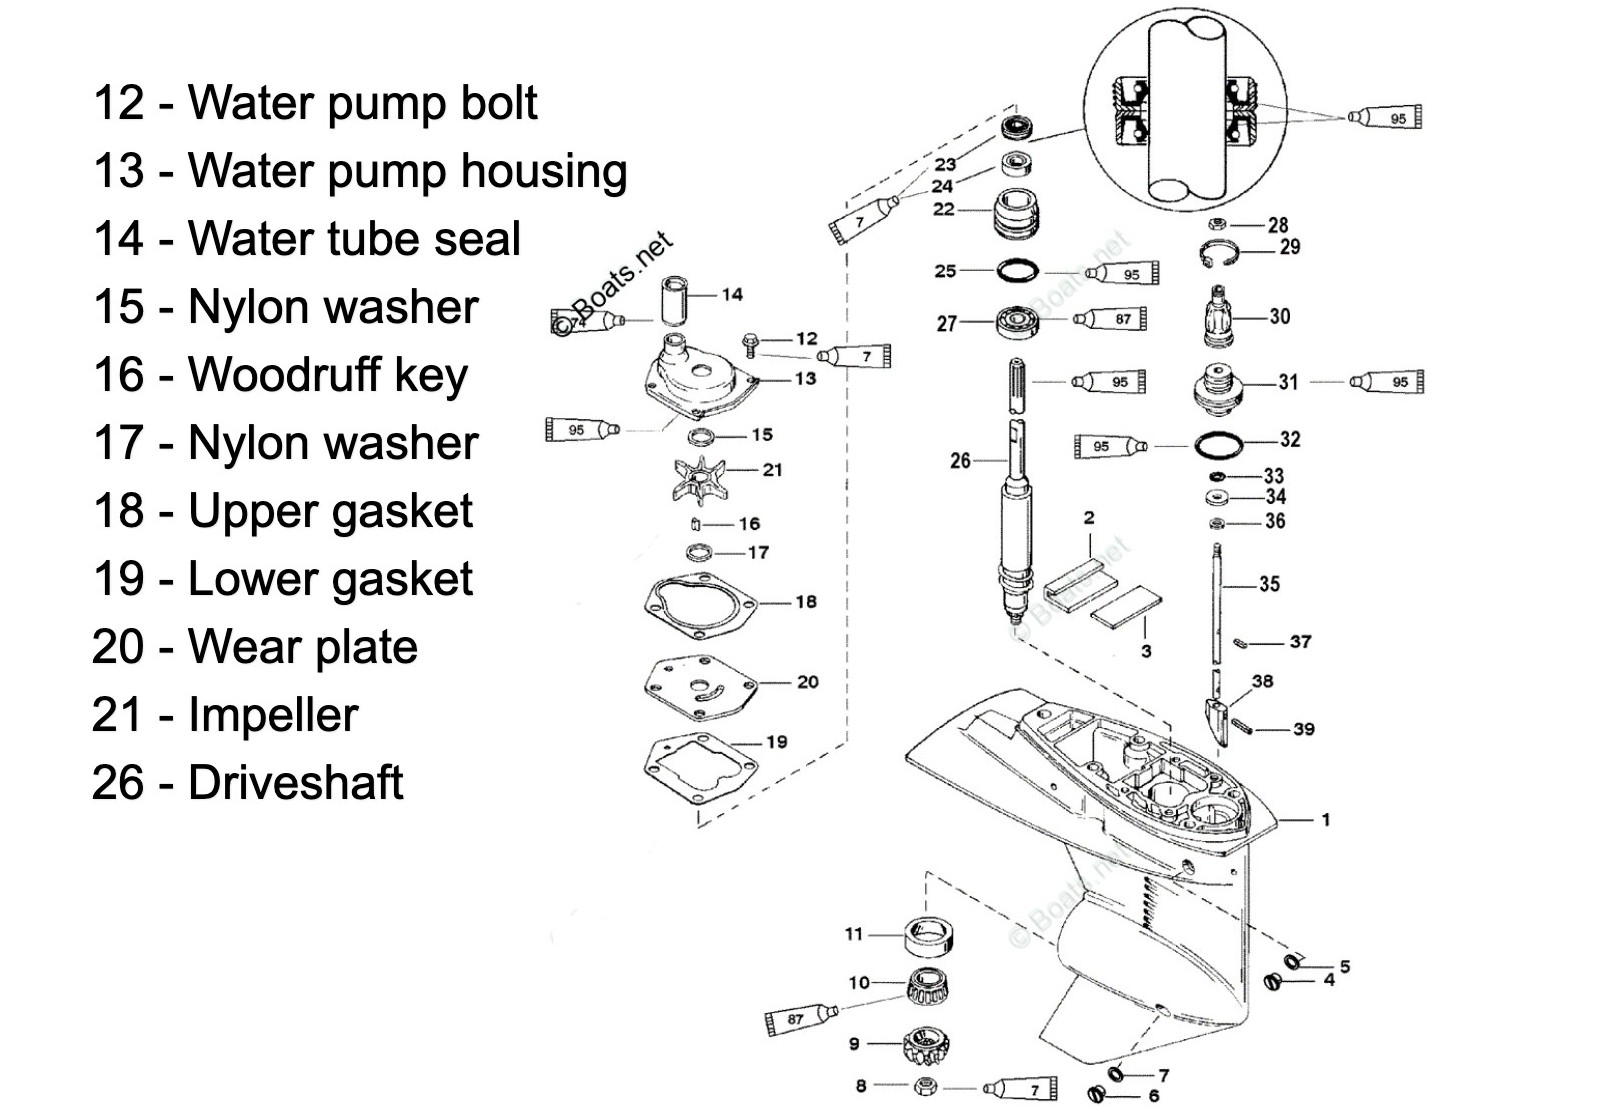 Mercury 40 water pump parts diagram